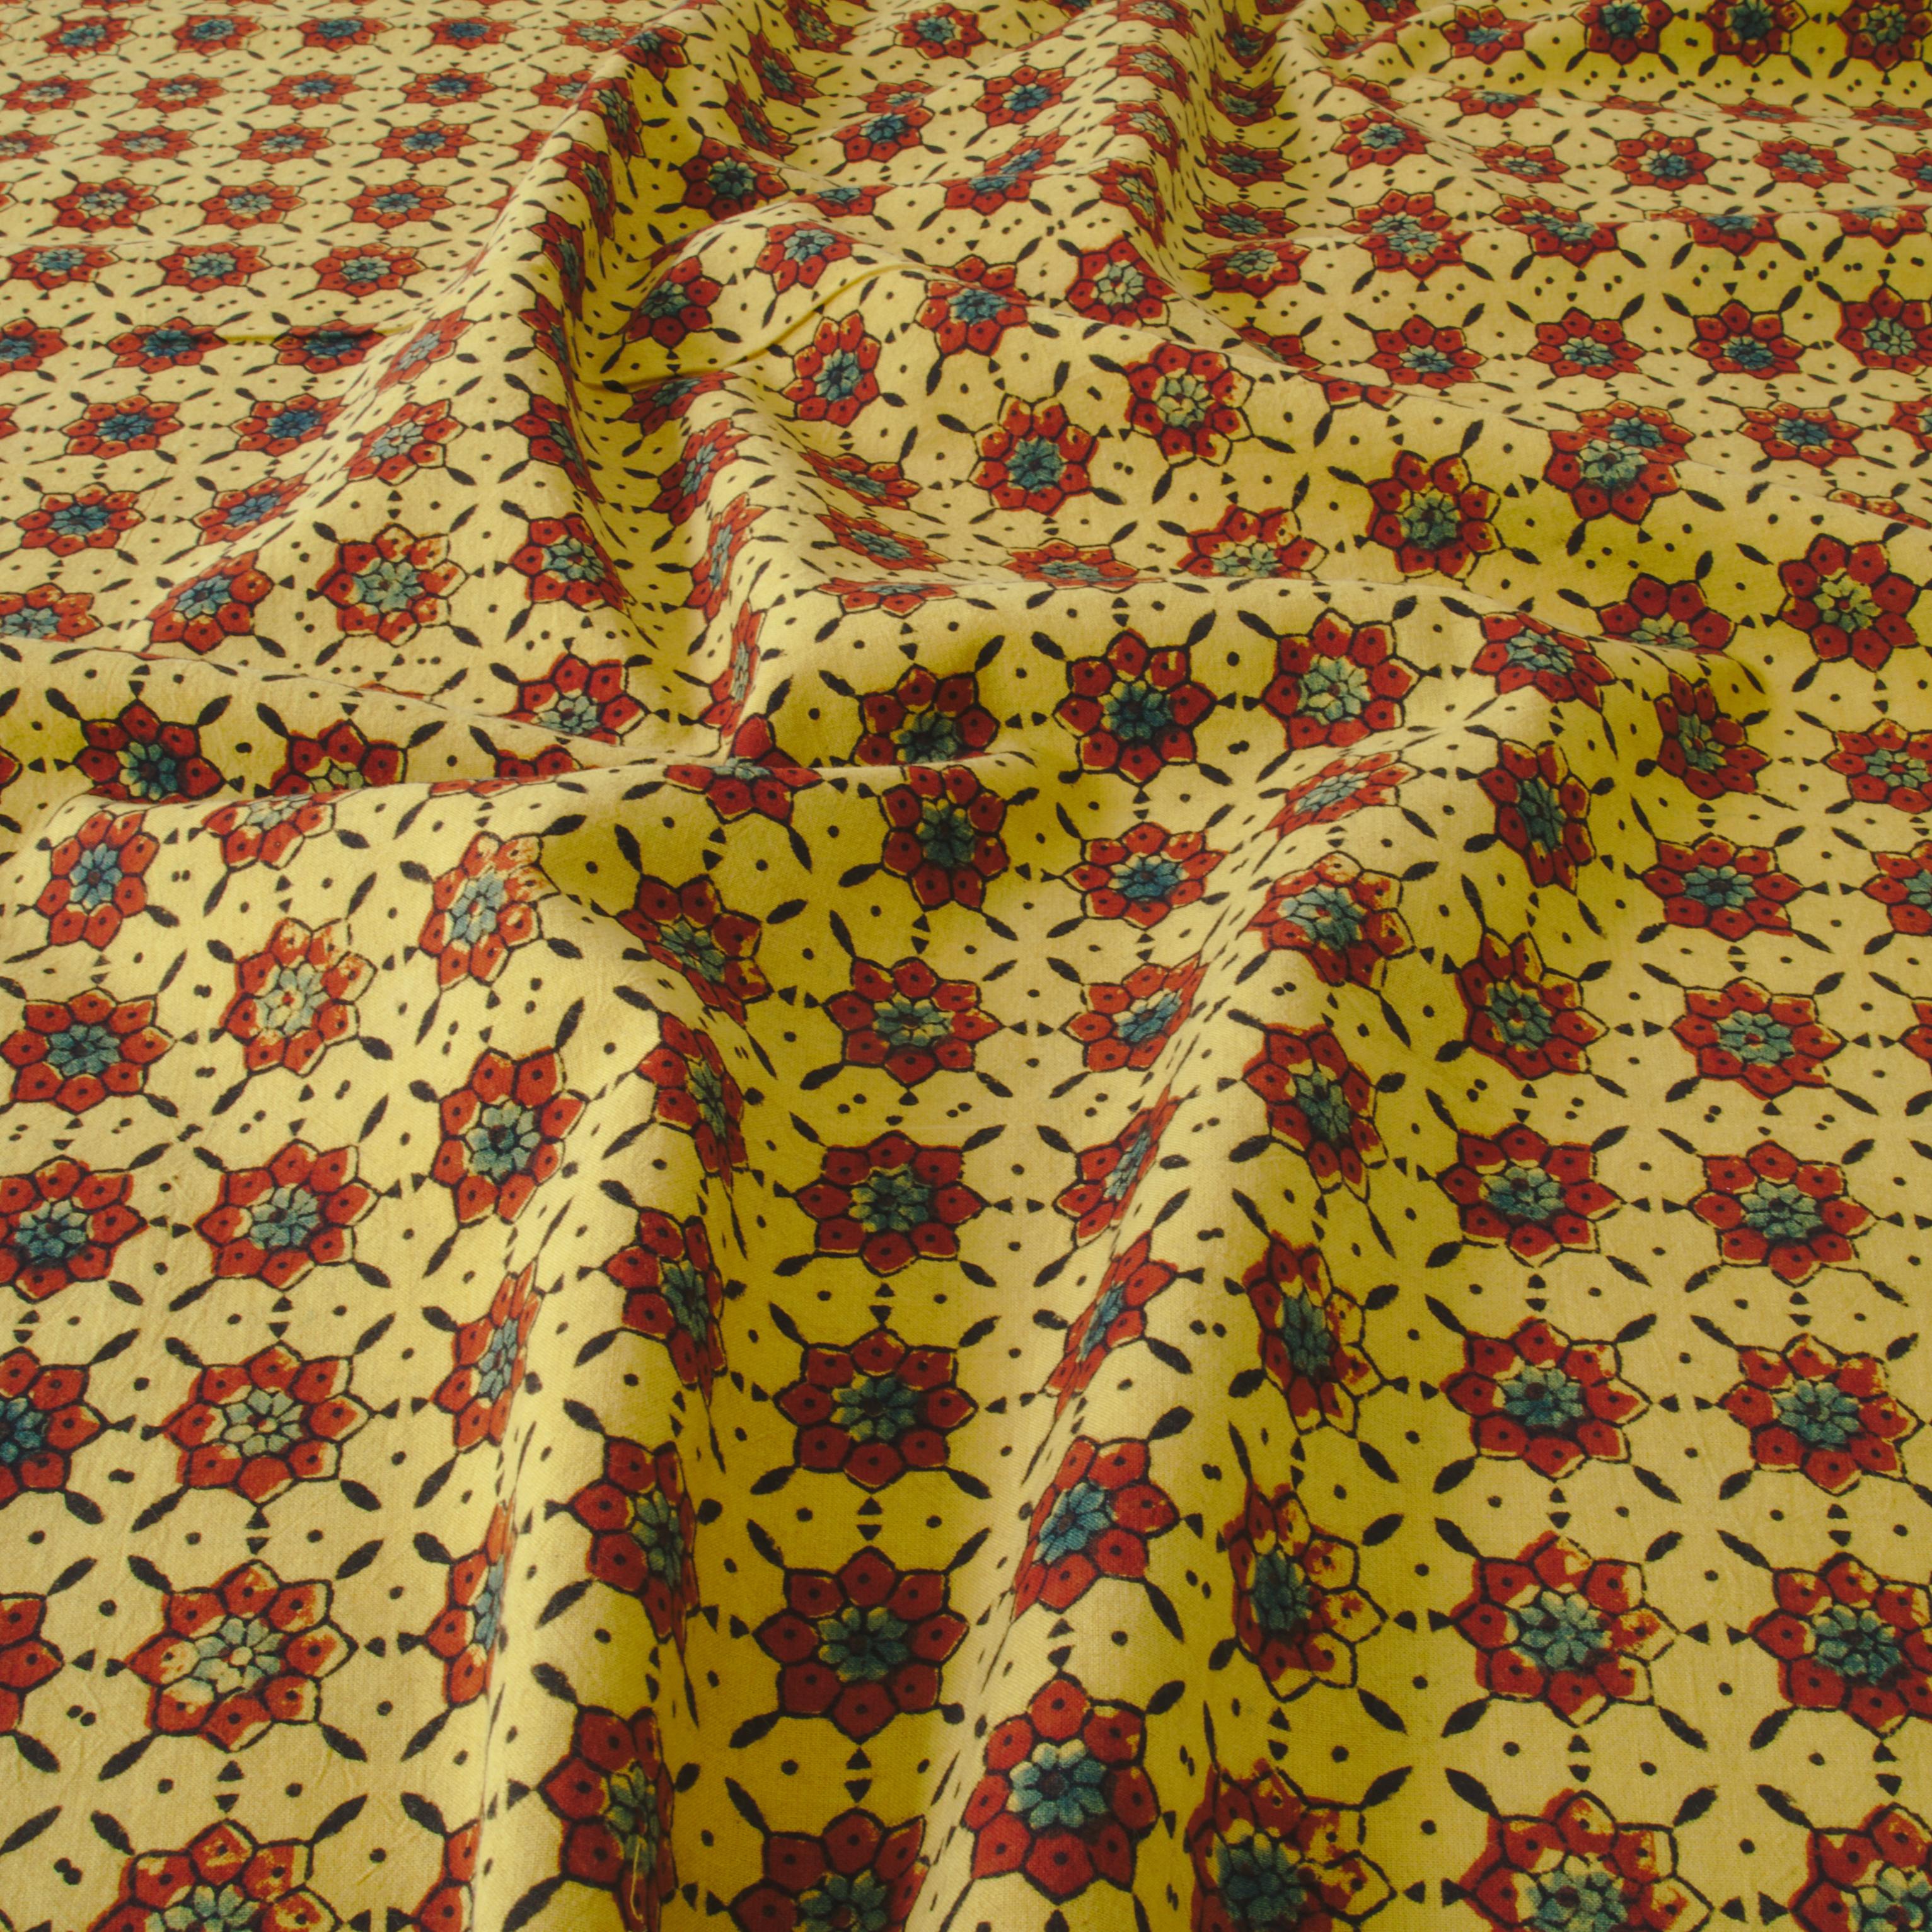 100% Printed Cotton - Starburst Print - Turmeric Yellow, Alizarin Red, Black, Indigo - Angle